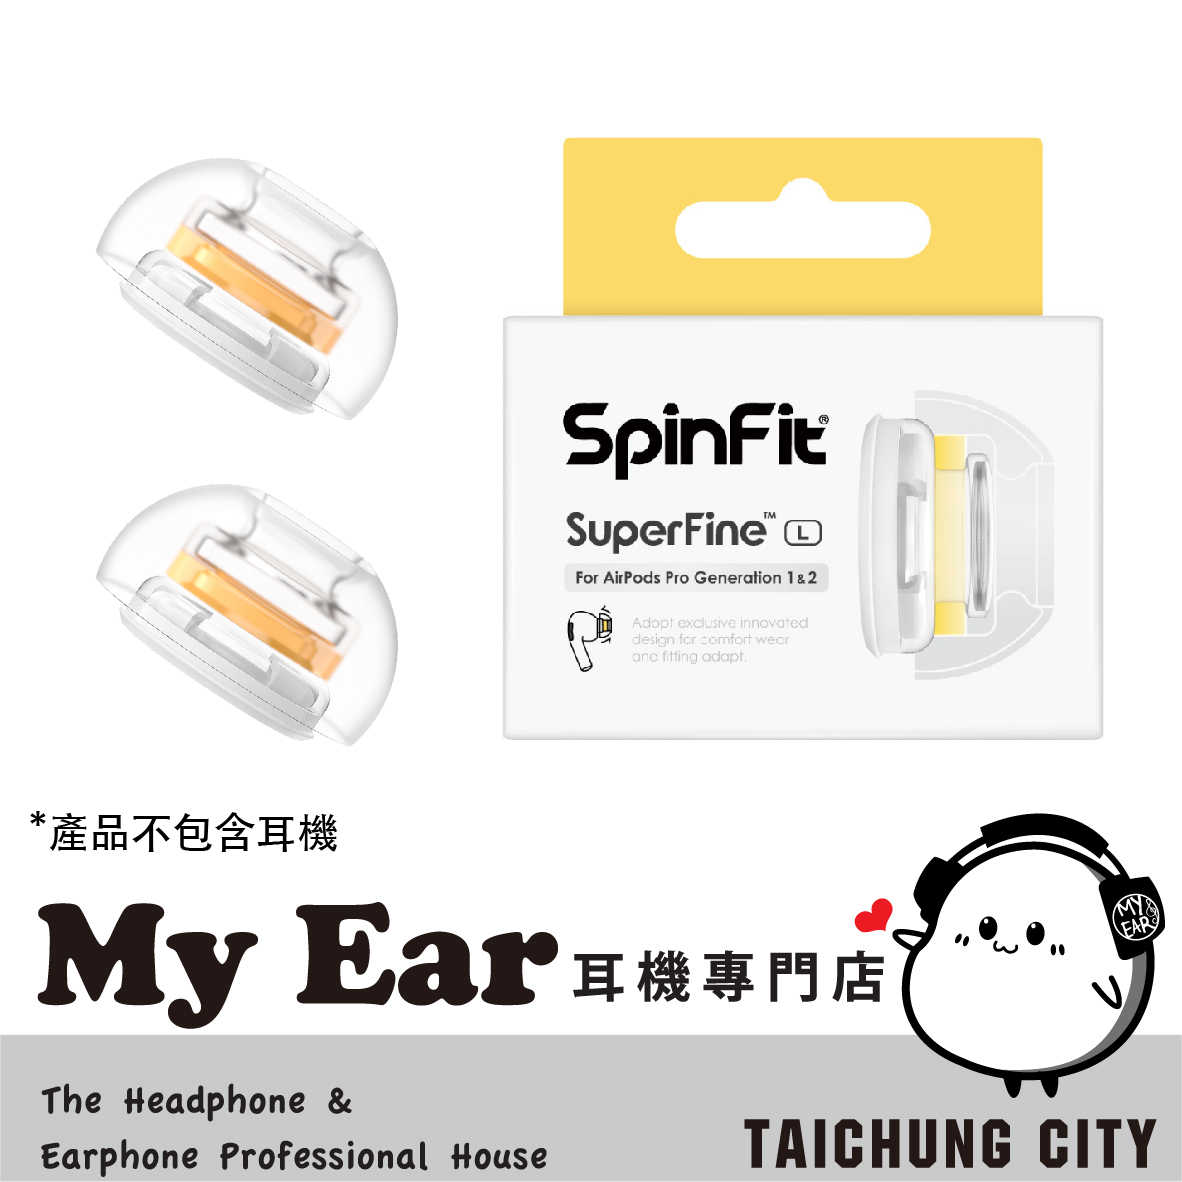 SpinFit SuperFine L 適用Airpods Pro CP1025 矽膠耳塞 | My Ear耳機專門店